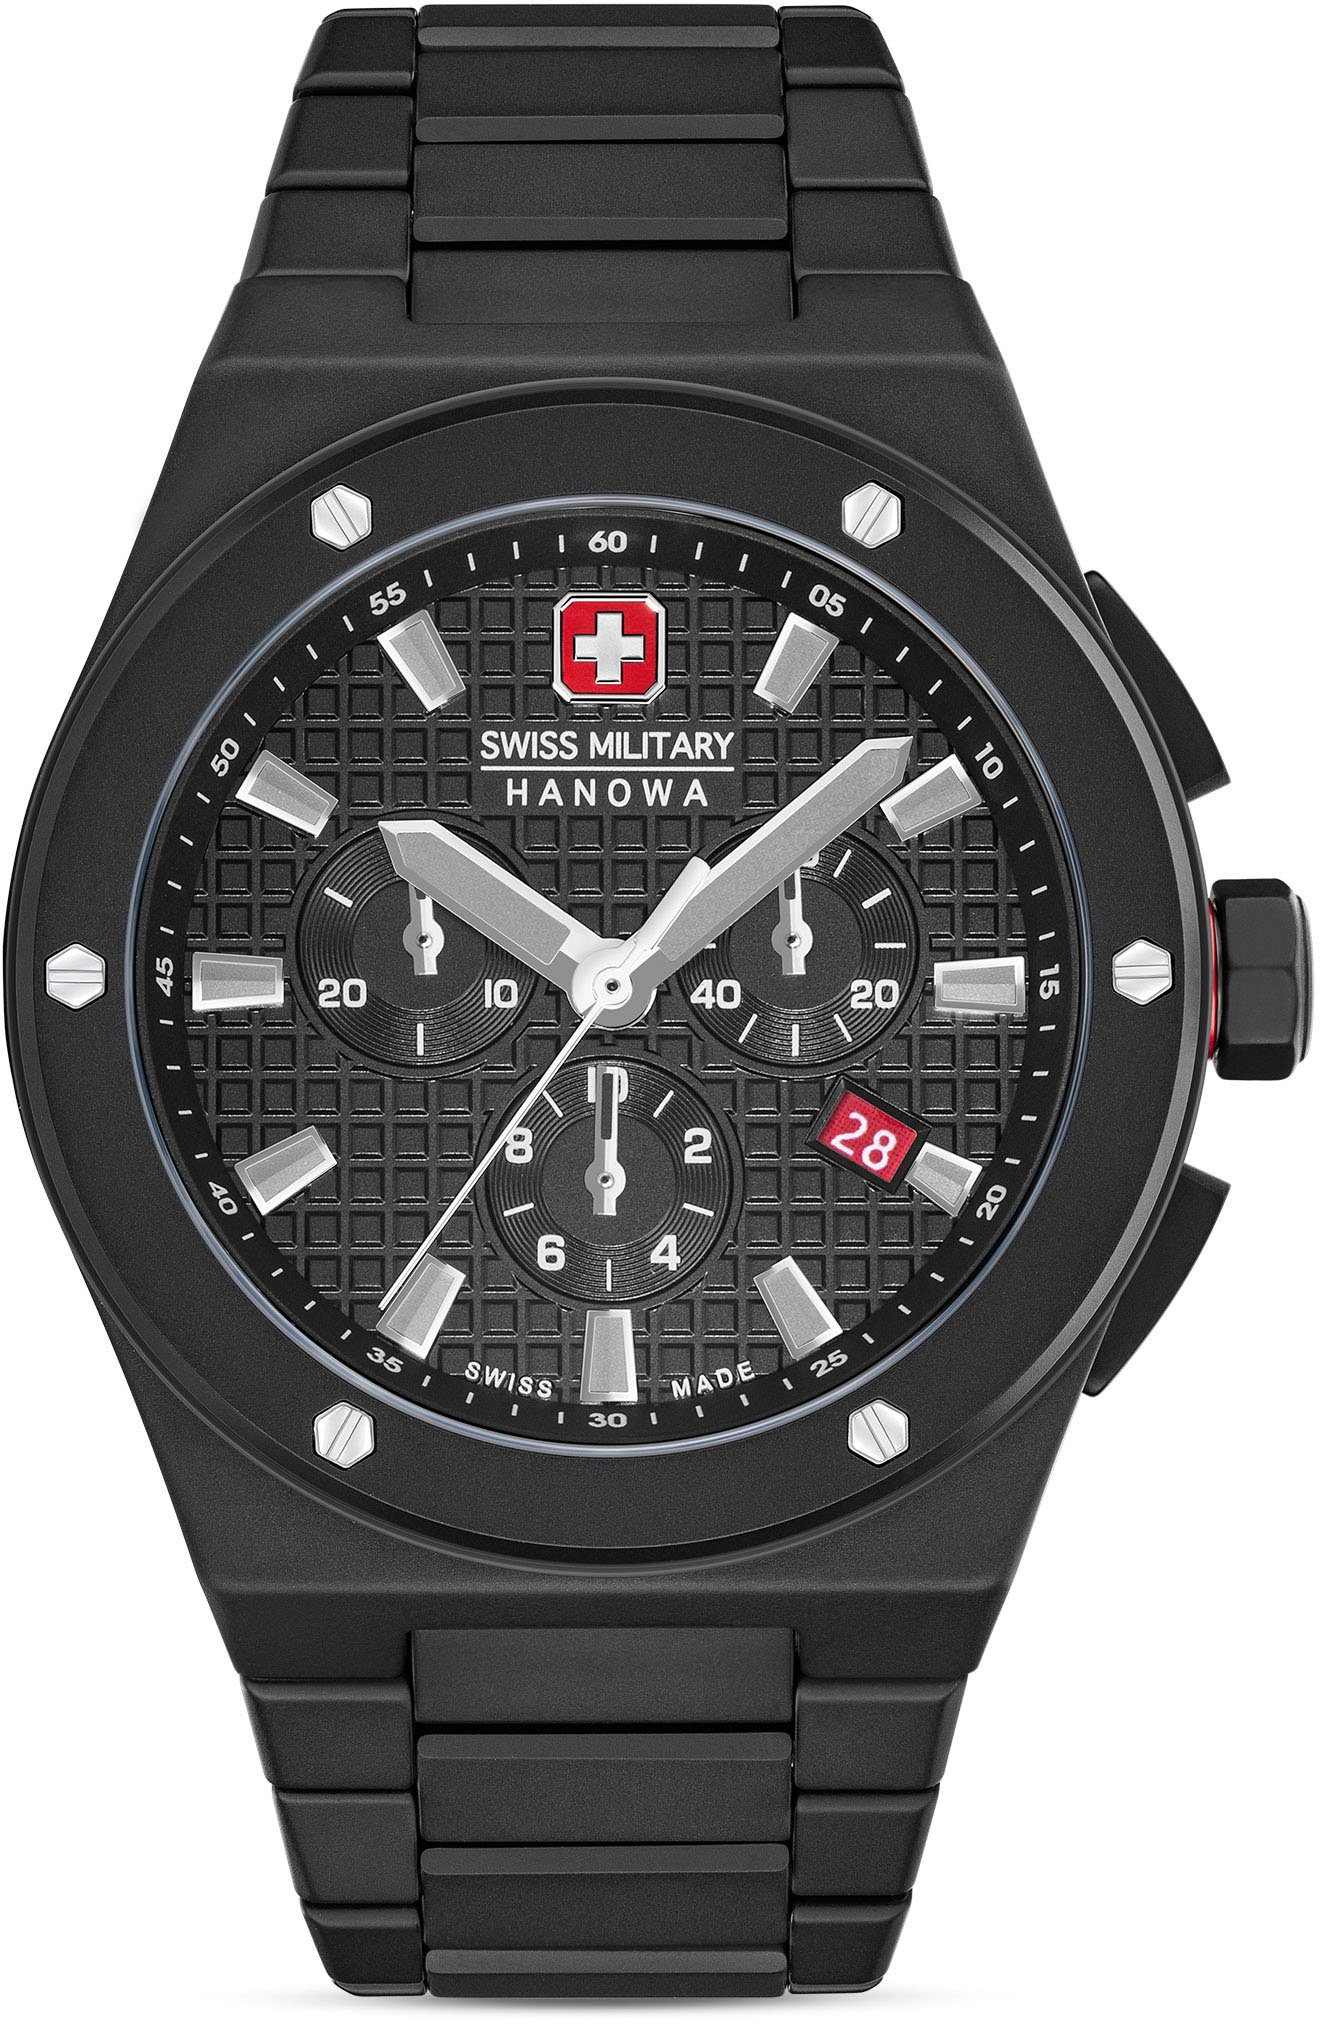 Swiss Military Hanowa Chronograph SIDEWINDER CERAMIC, SMWGI0002280, Quarzuhr, Herrenuhr, Datum, Stoppfunktion, Saphirglas, Swiss Made